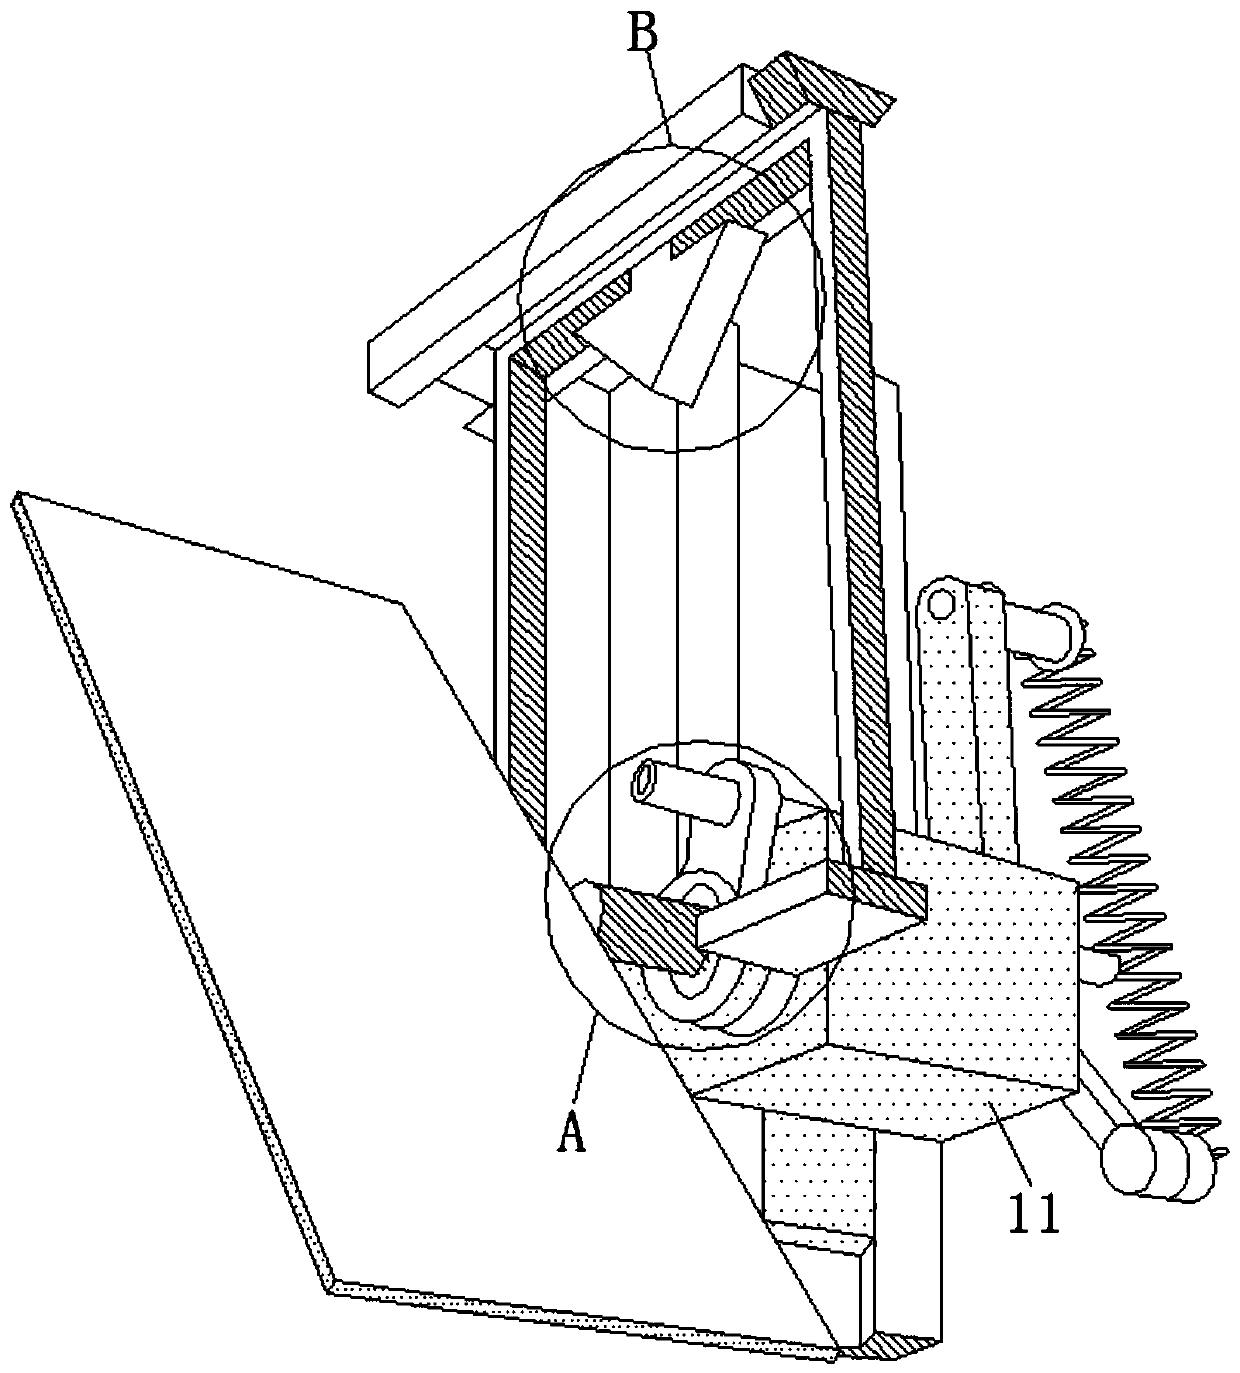 Double-sided ironing device capable of overturning based on reciprocating motion